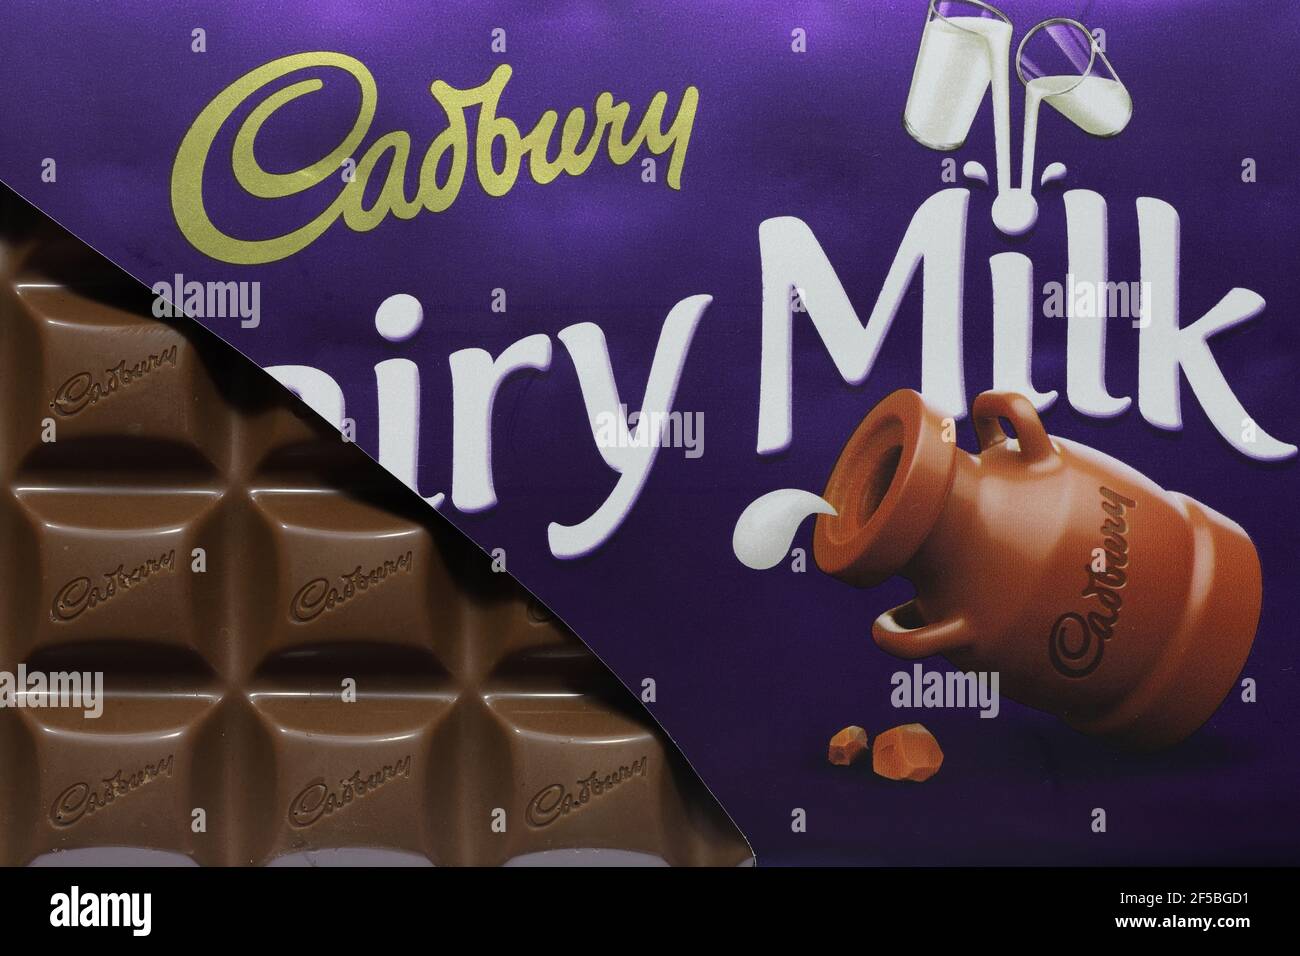 Cadbury Dairy Milk bar of chocolate Stock Photo